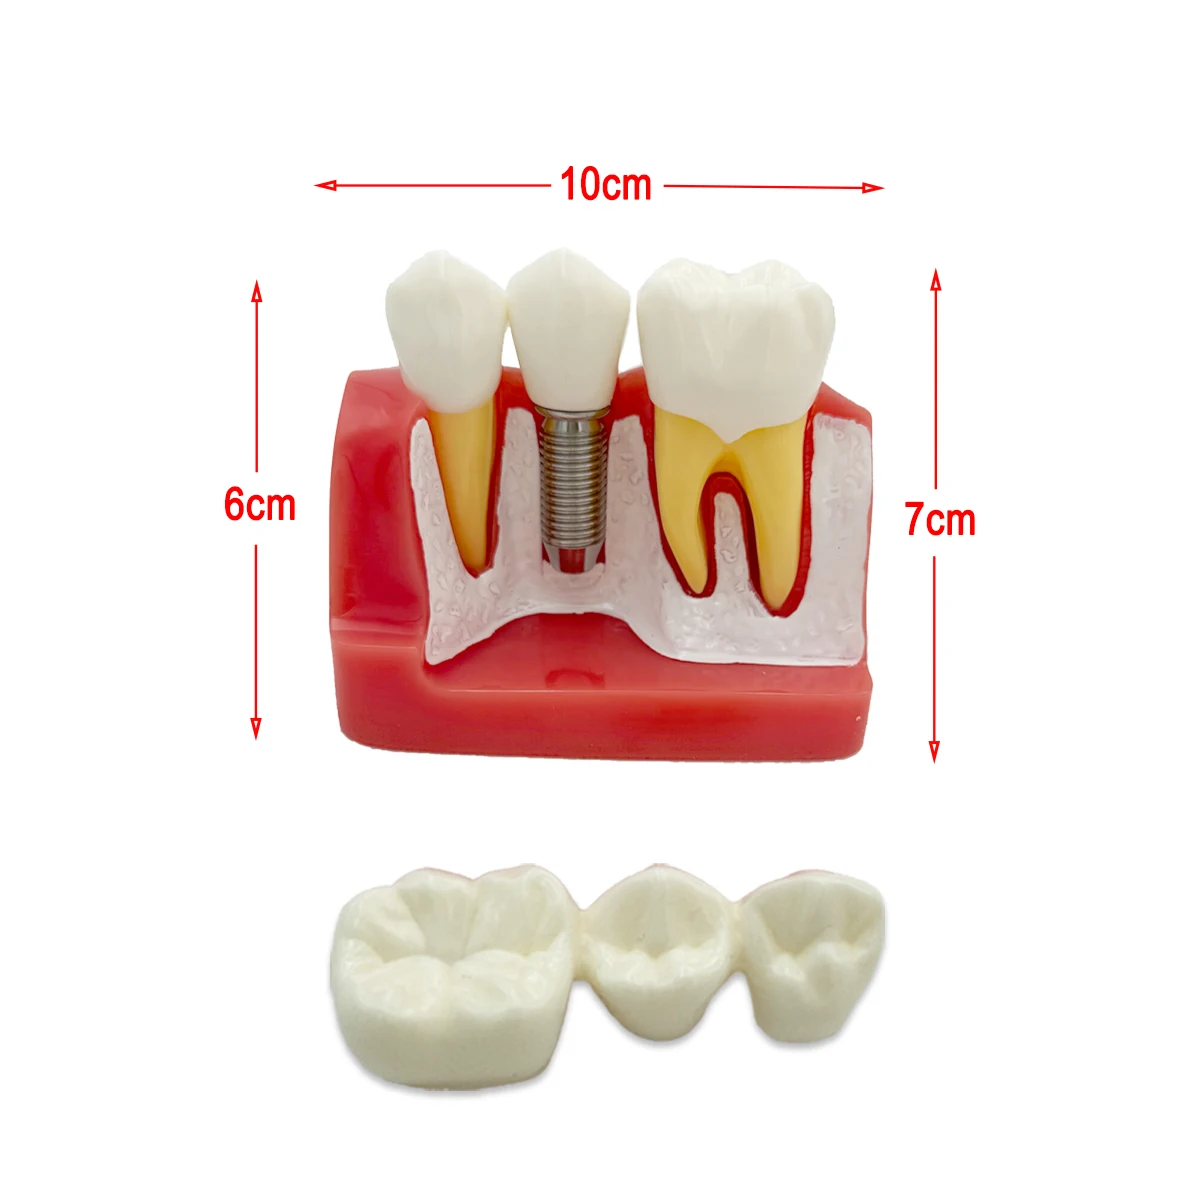 

Teeth Model Dental Teach Implant Analysis Crown Bridge Removable Models Dental Demonstration Teeth Model For Dentist Student